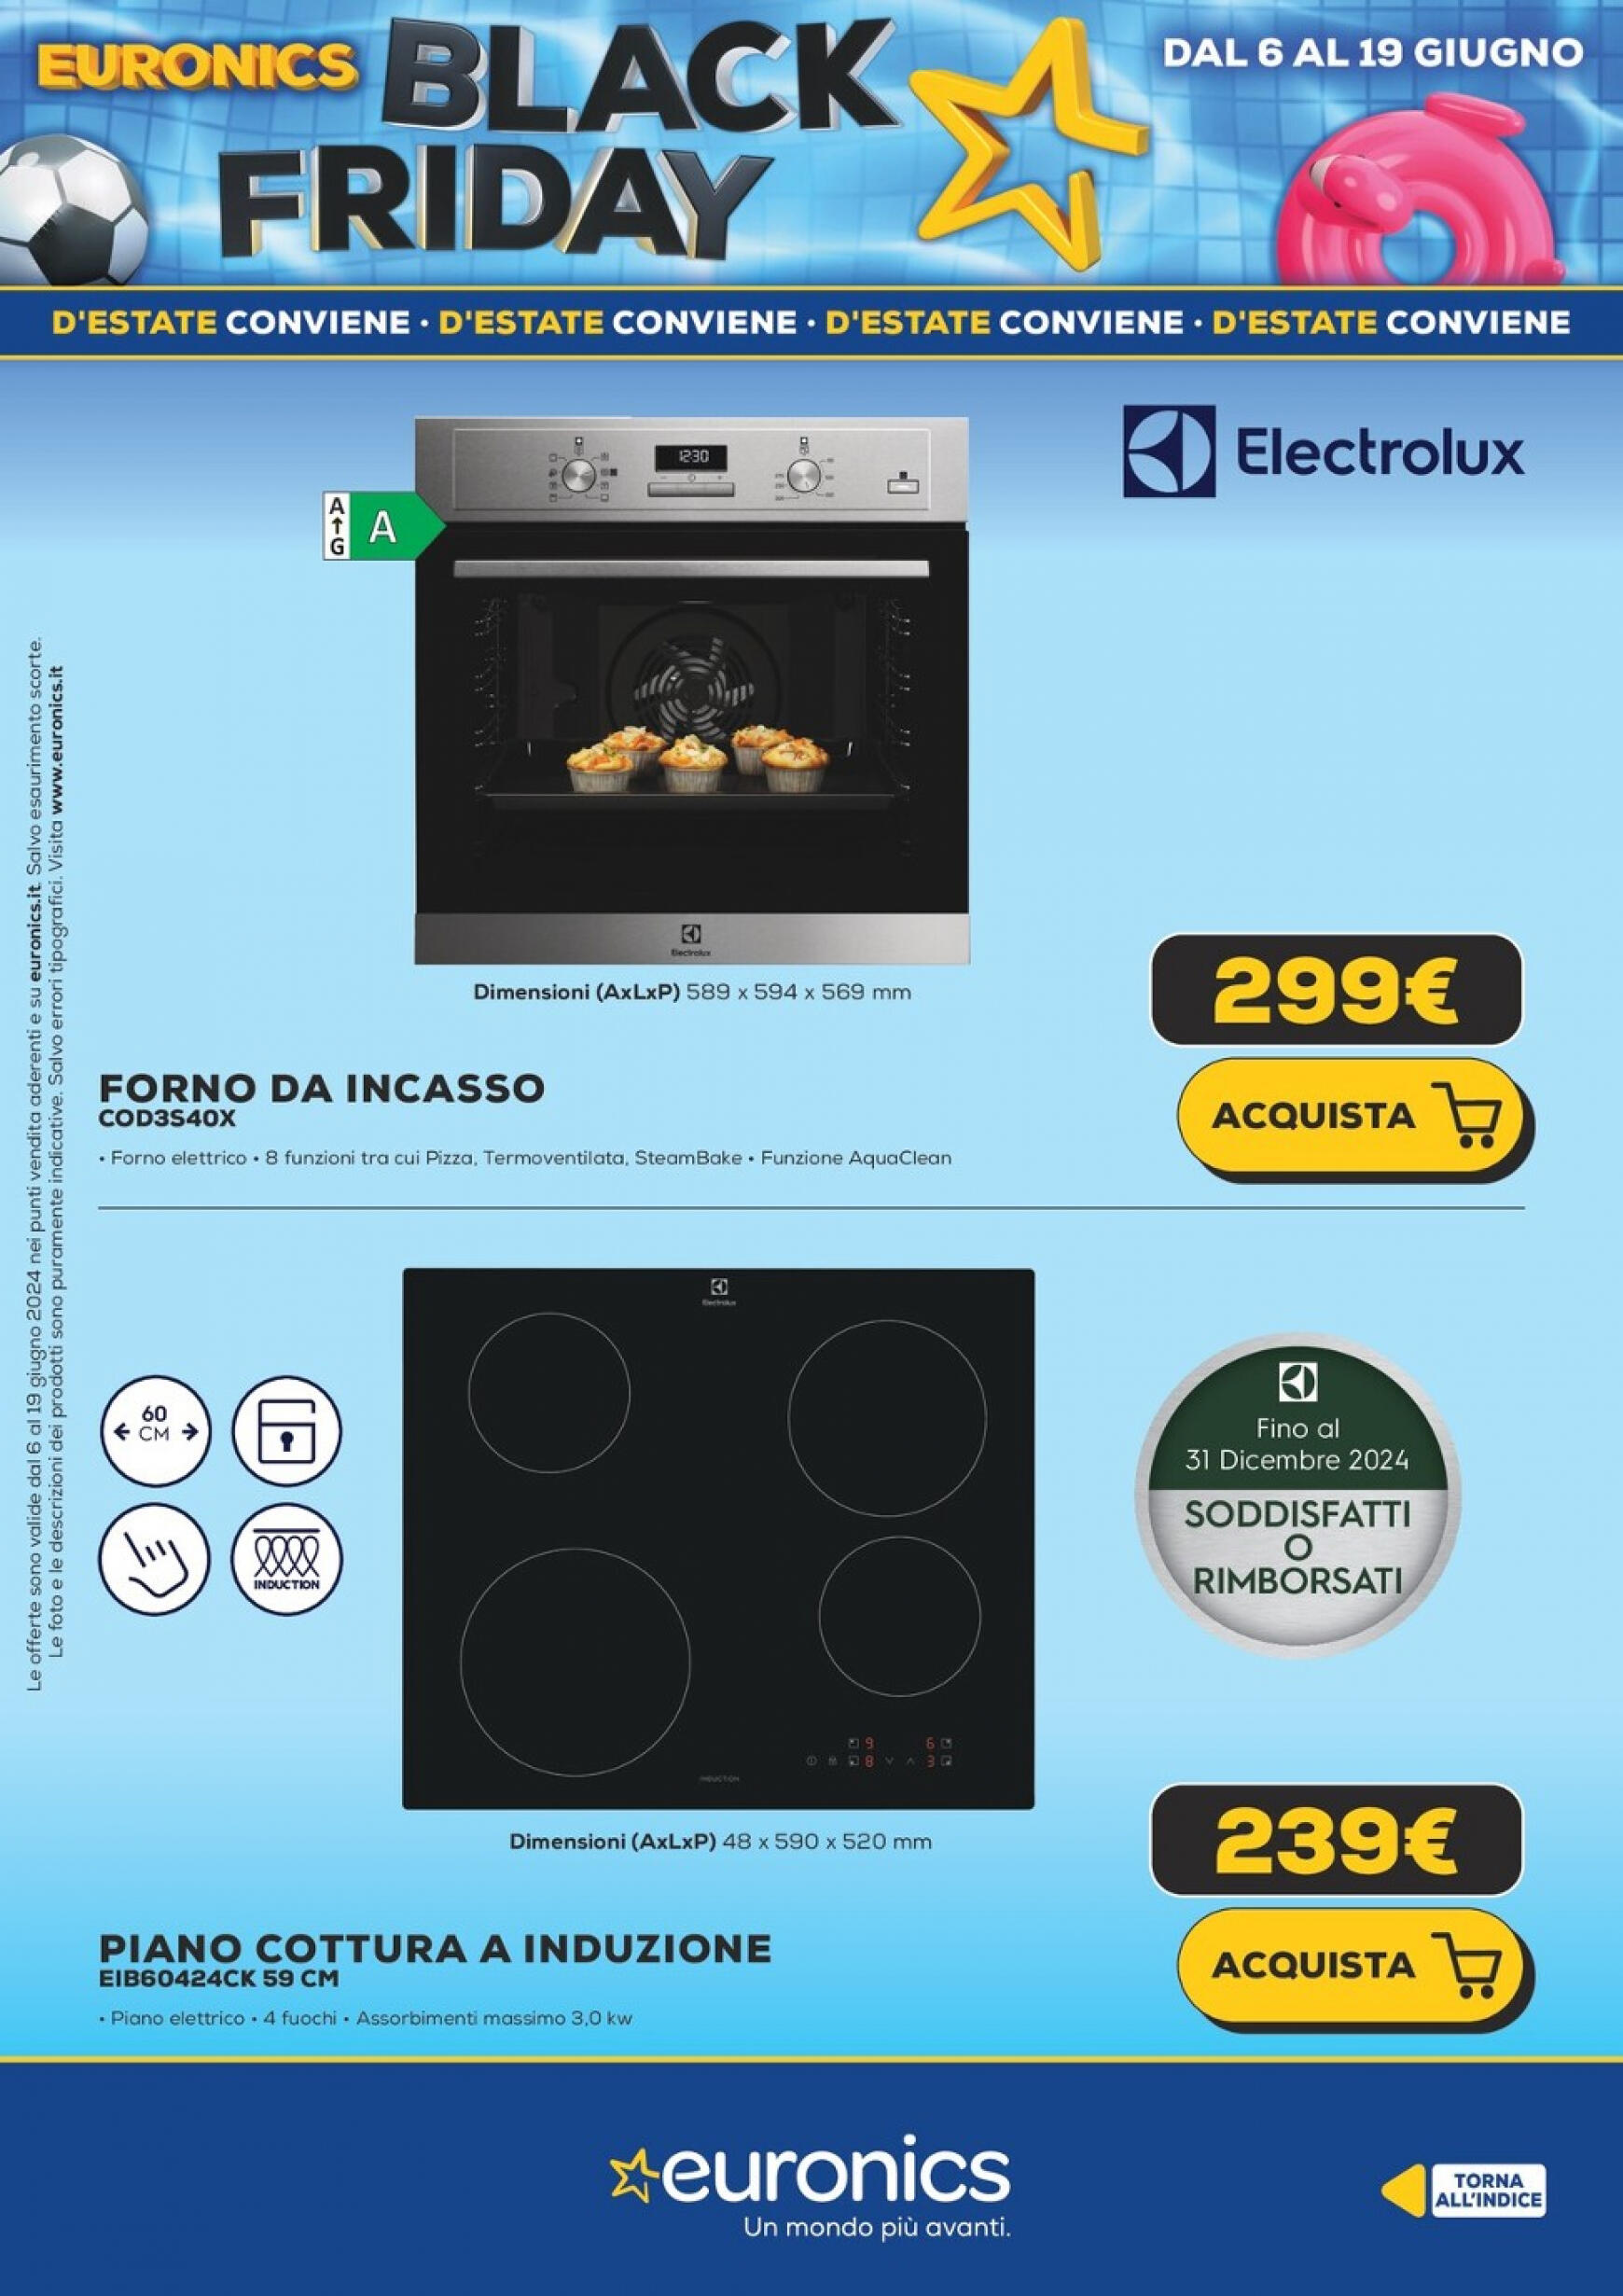 euronics - Nuovo volantino Euronics - Black Friday d'Estate 06.06. - 19.06. - page: 39